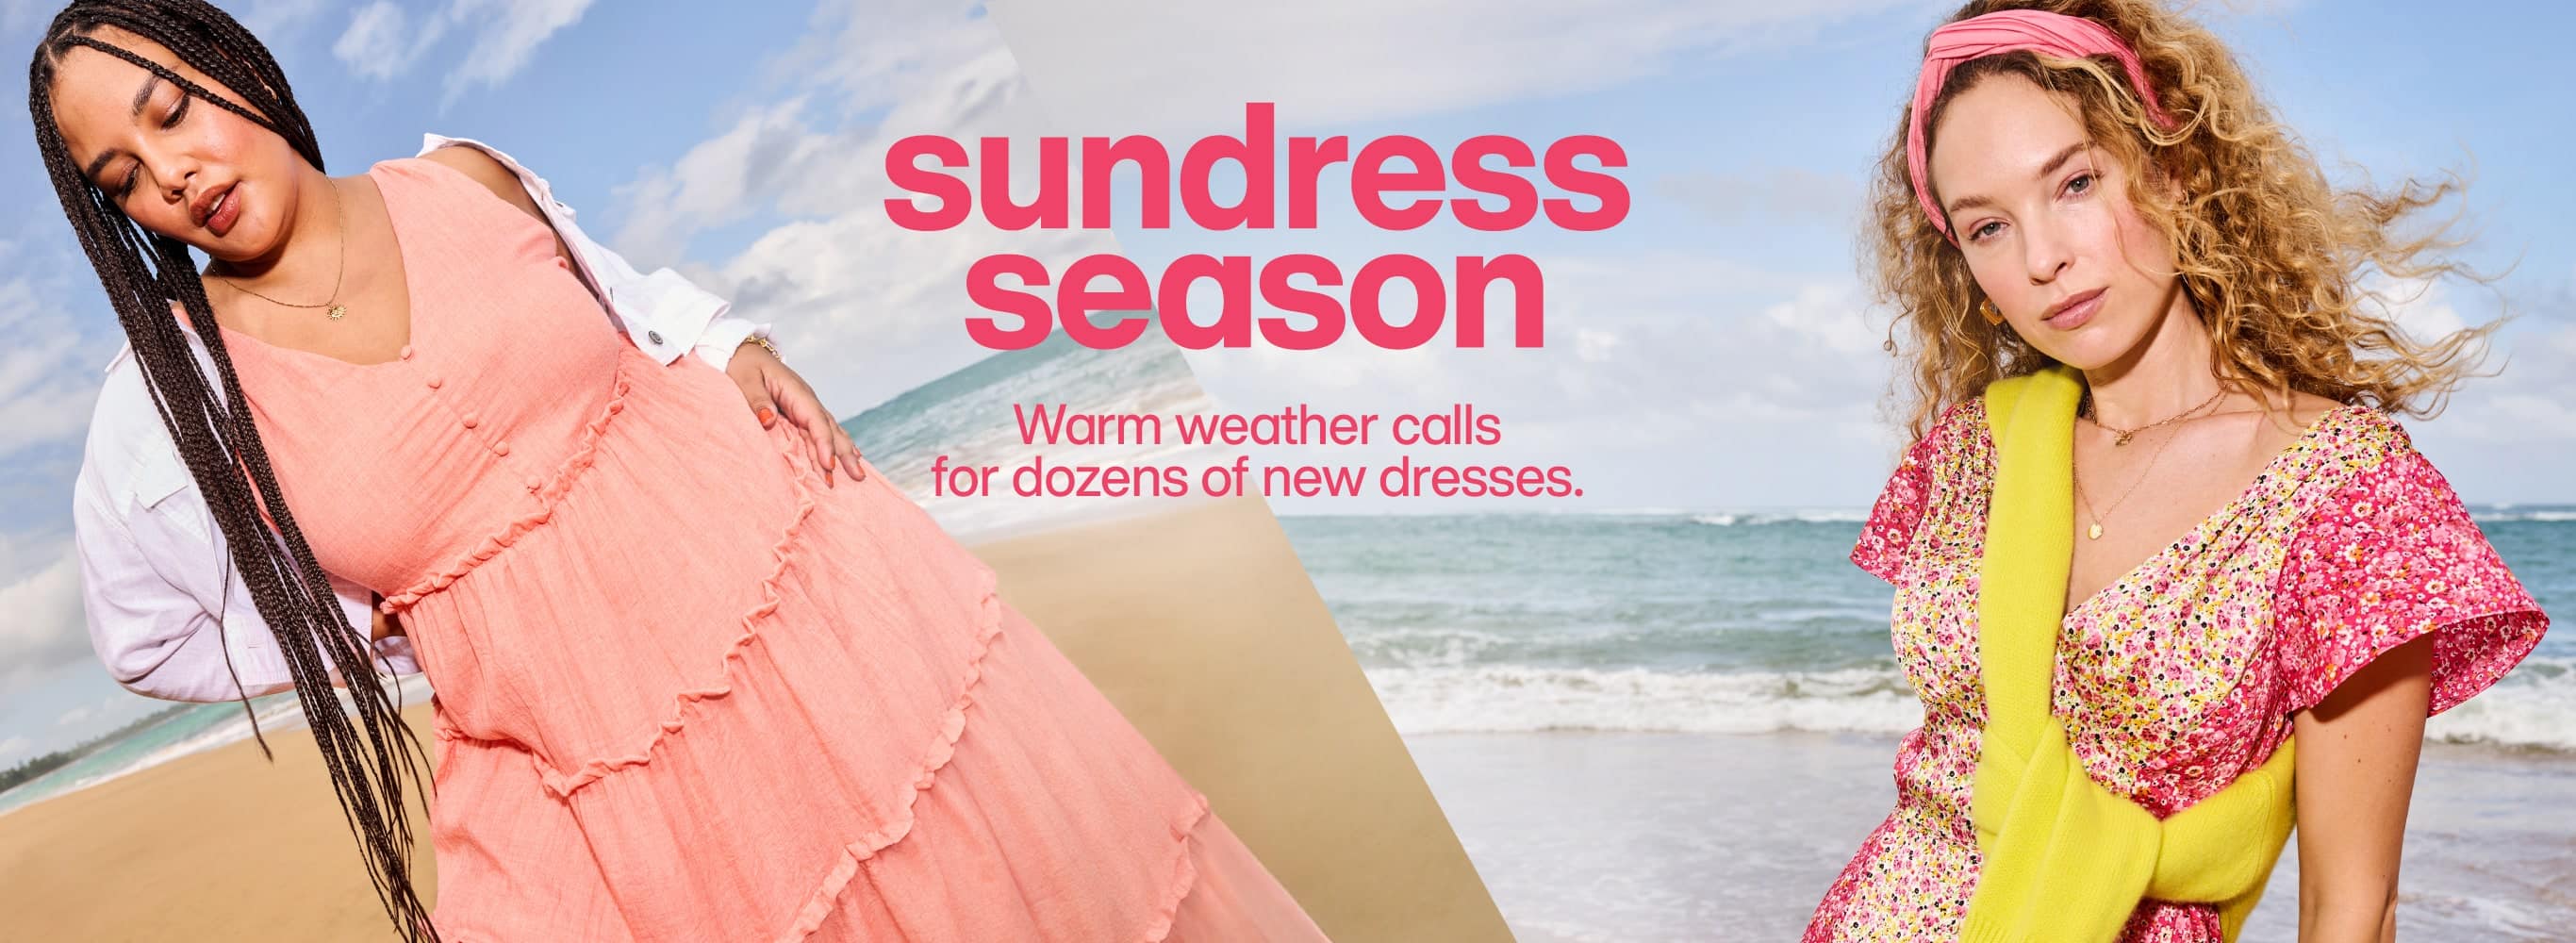 Sundress Season. Warm weather calls for dozens of new dresses.